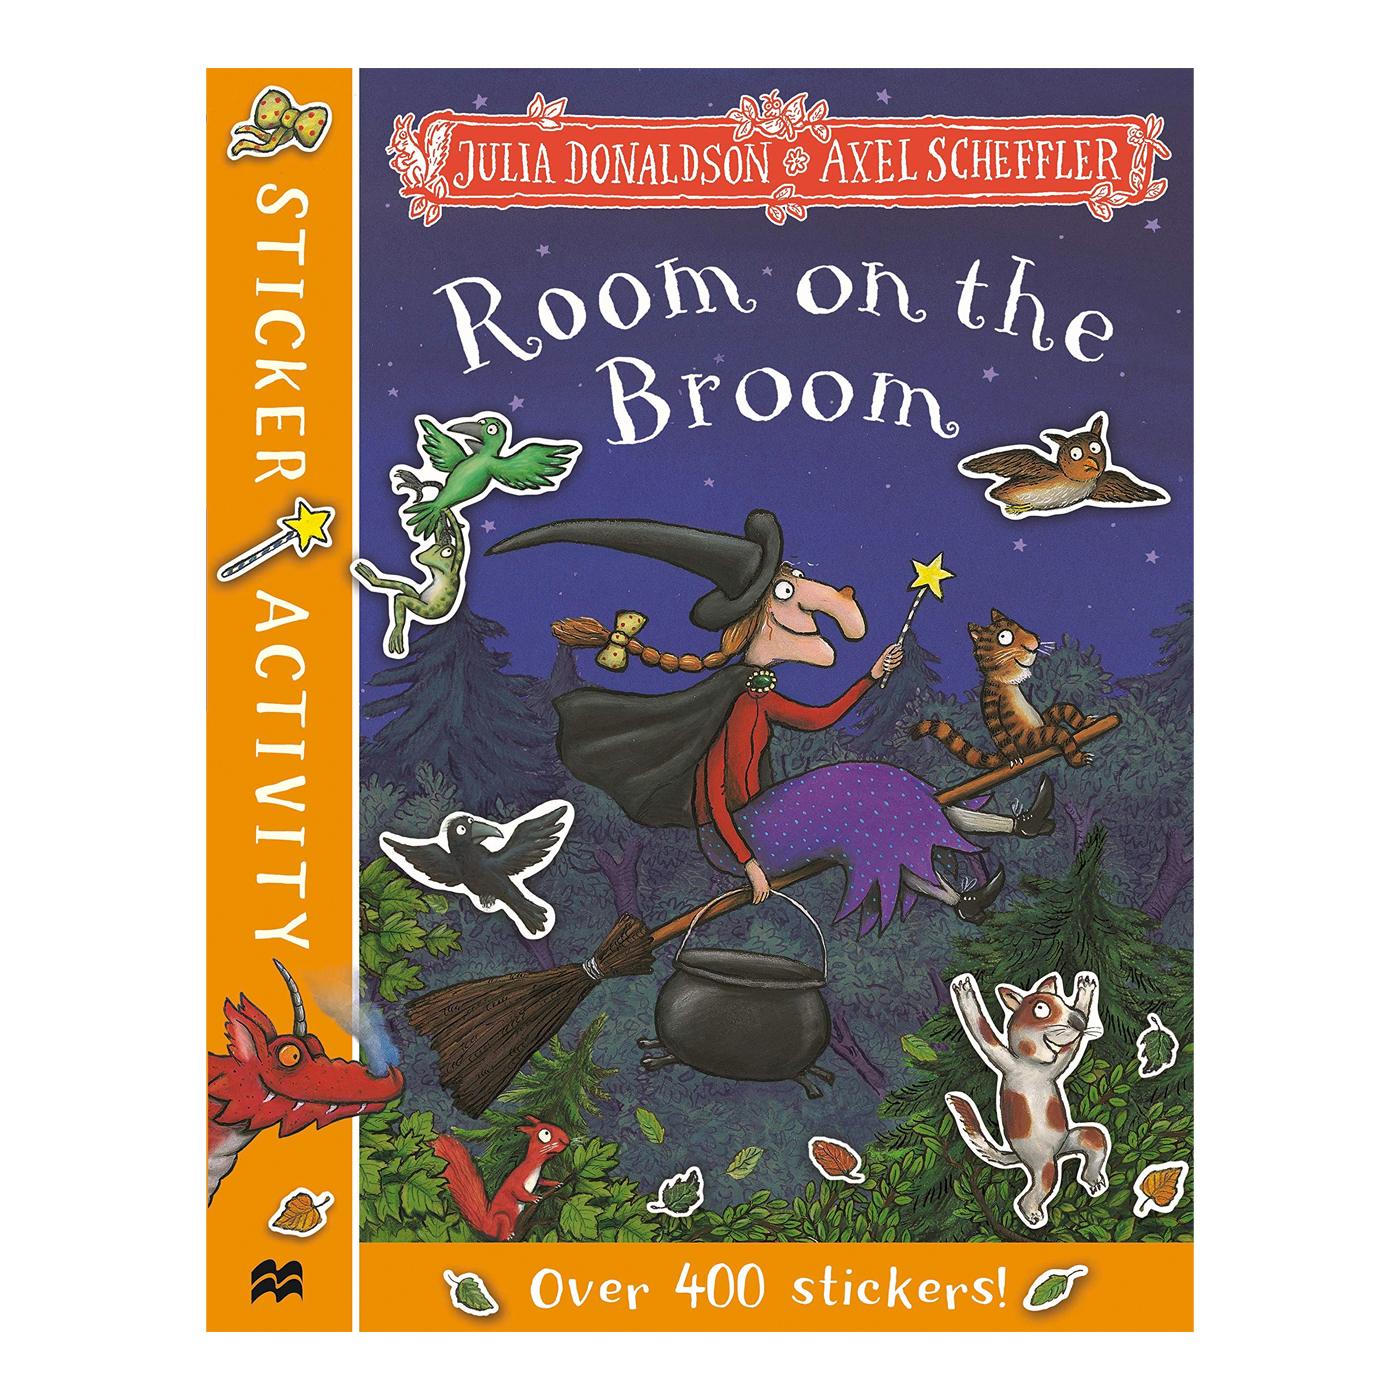  Room on the Broom Sticker Book